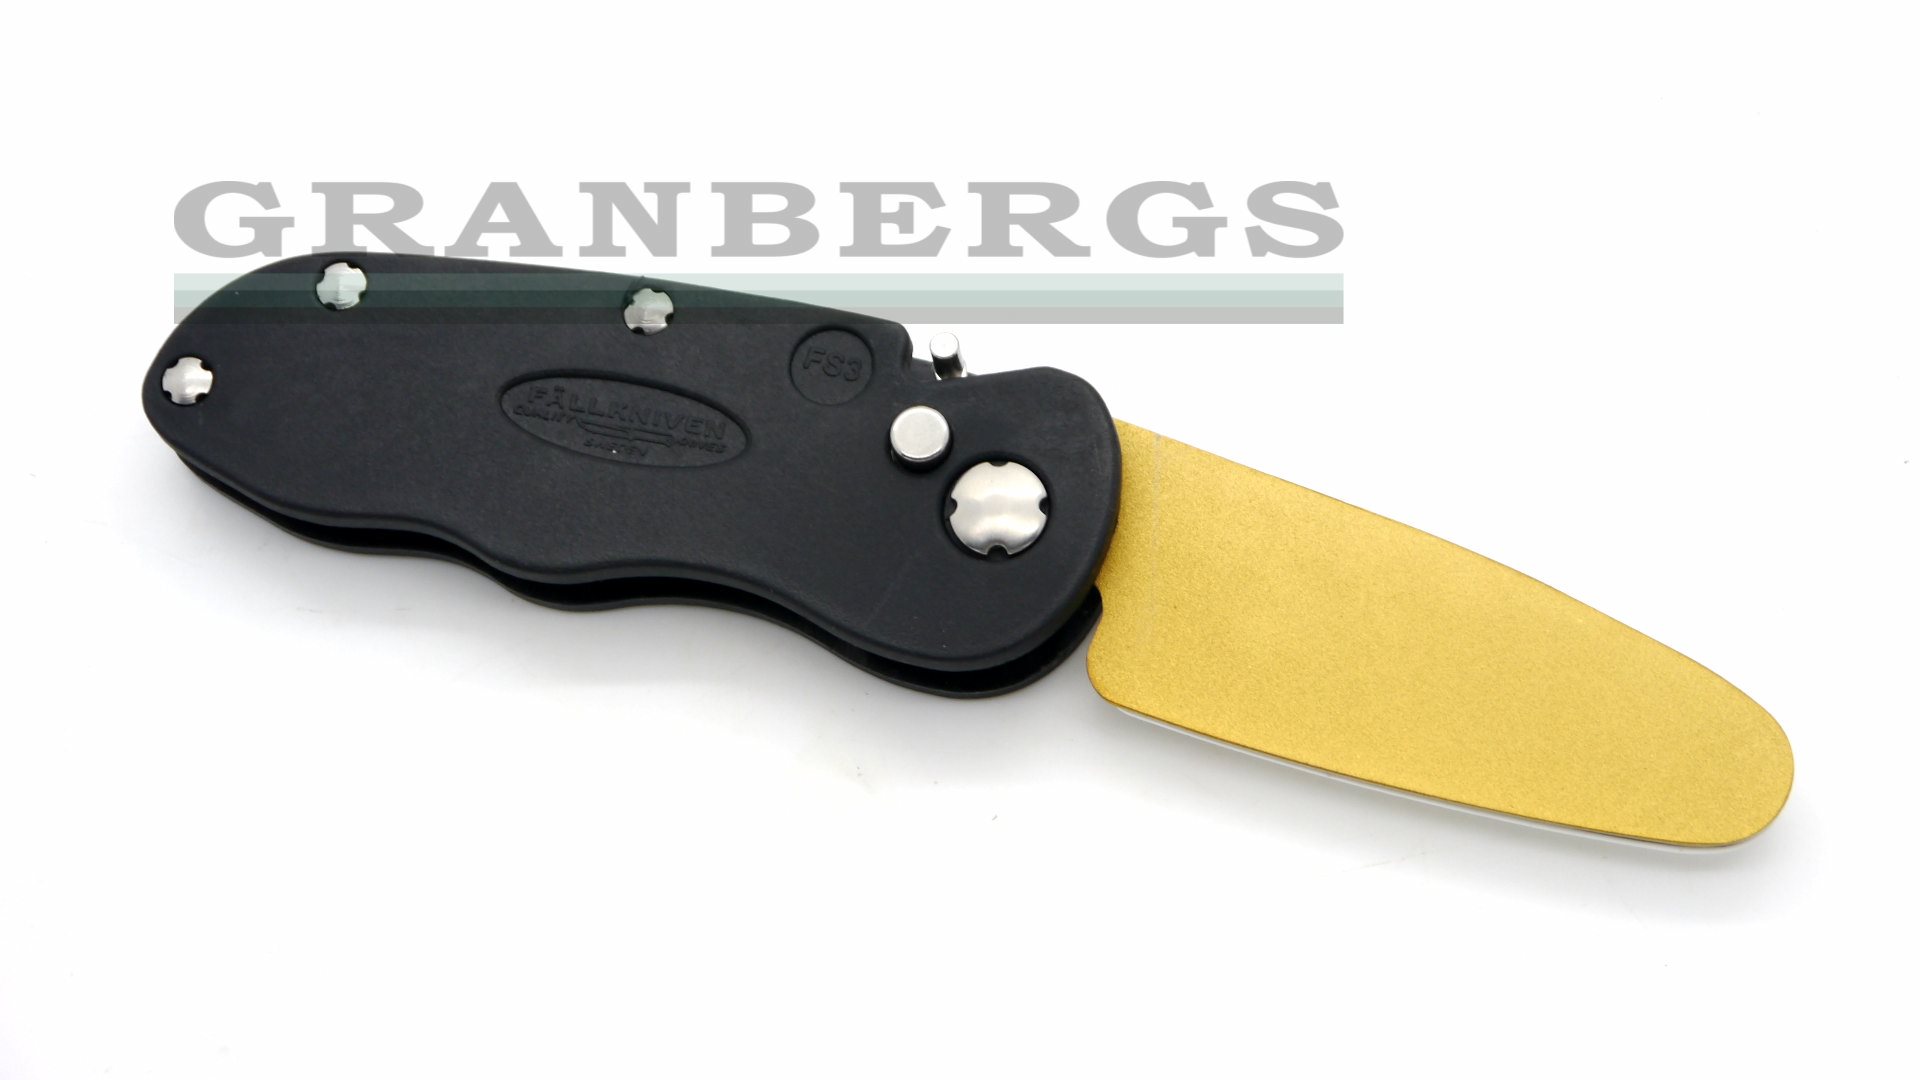 https://granbergs.com.au/getattachment/Products/Knives-Outdoors/Fallkniven-FS3-Flipstone-Sharpener-(1)/1P1120465Fallkniven-FS3-Flipstone-Sharpener-1920p-Watermark.jpg.aspx